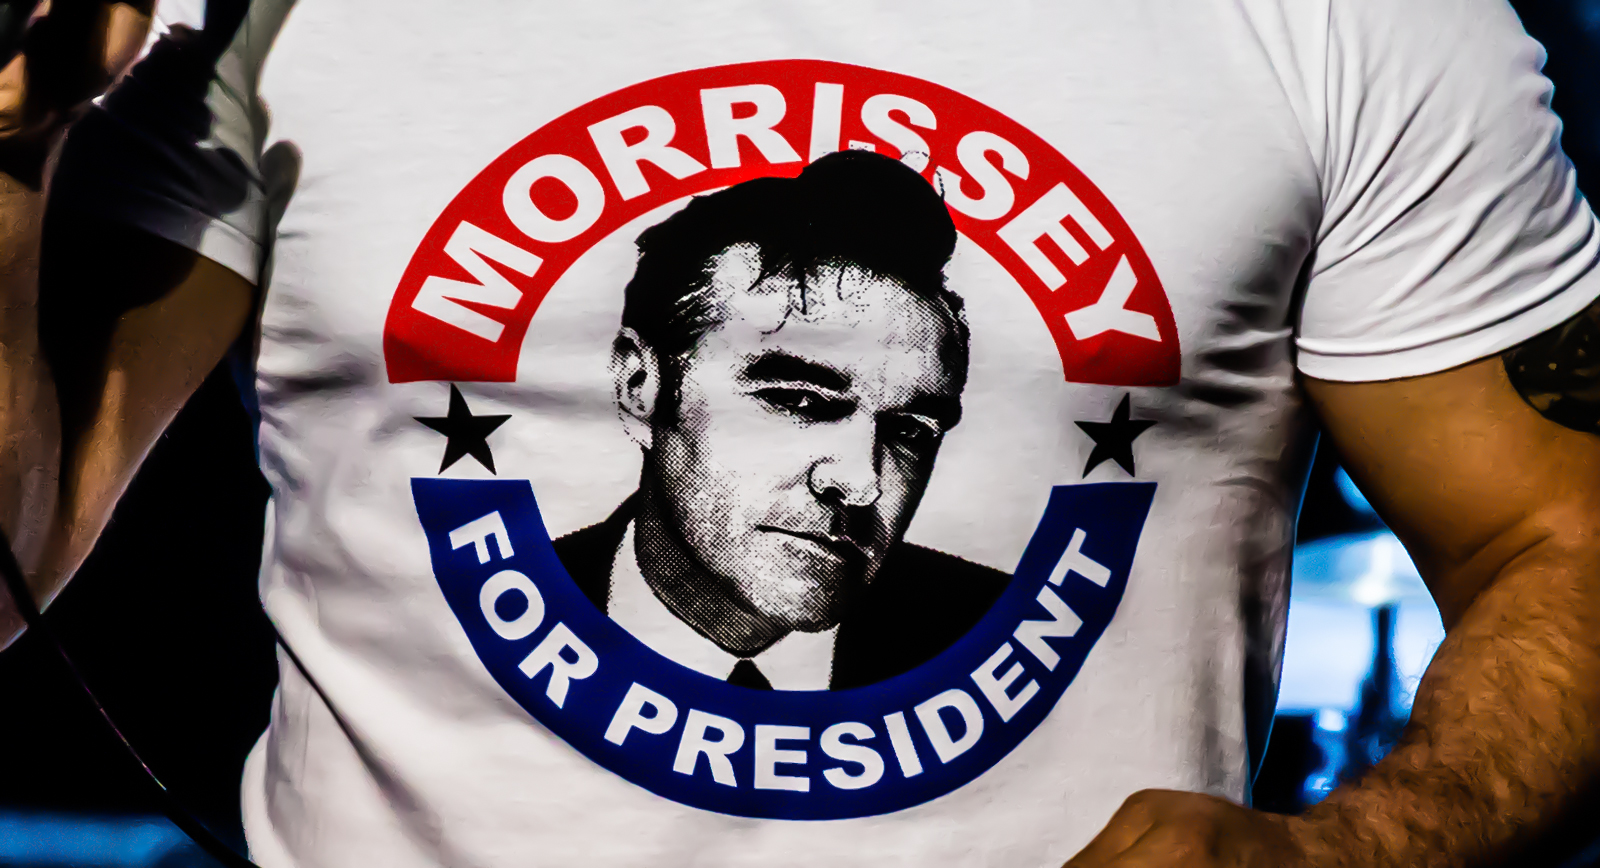 Morrissey-Concert-Review-Photos-2015-Tour-Masonic-San-Francisco-FI